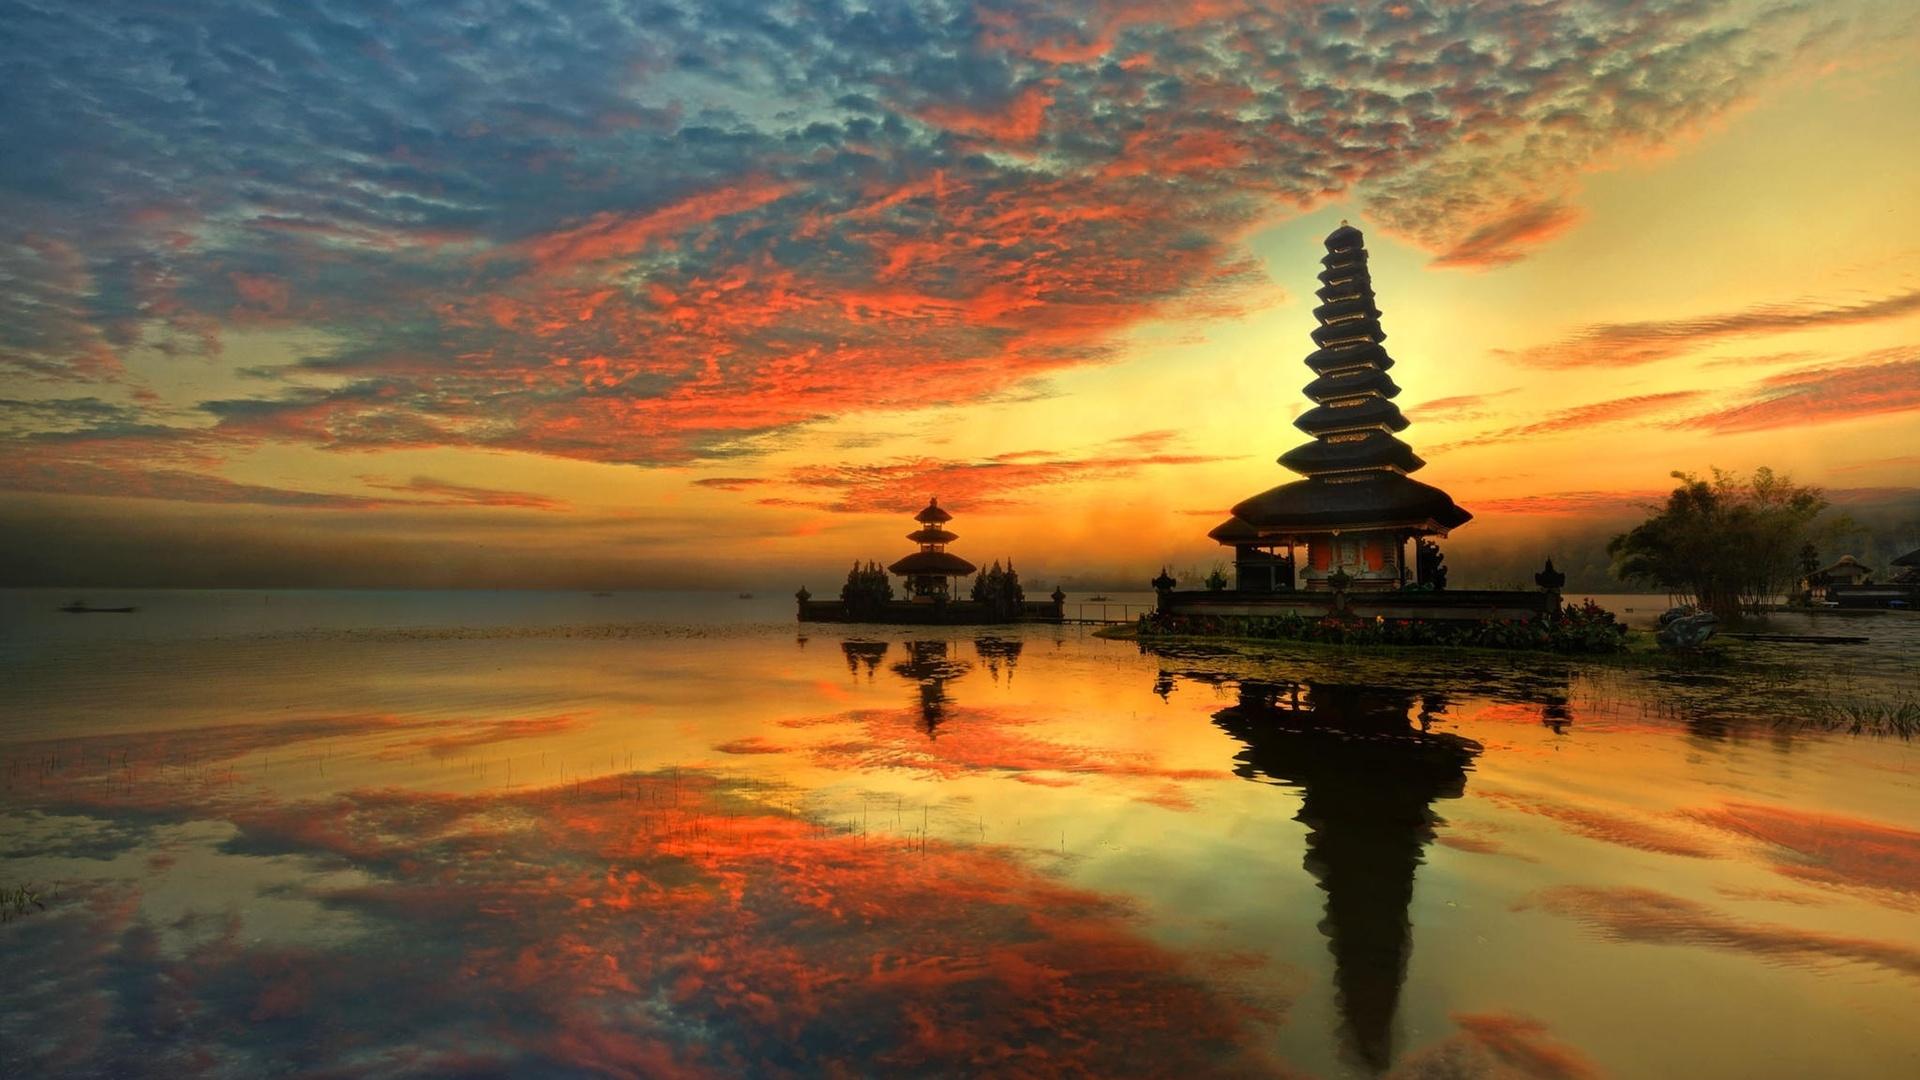 Bali, Travel To Bali, Sunset, Bali 4k, Picture Of Bali